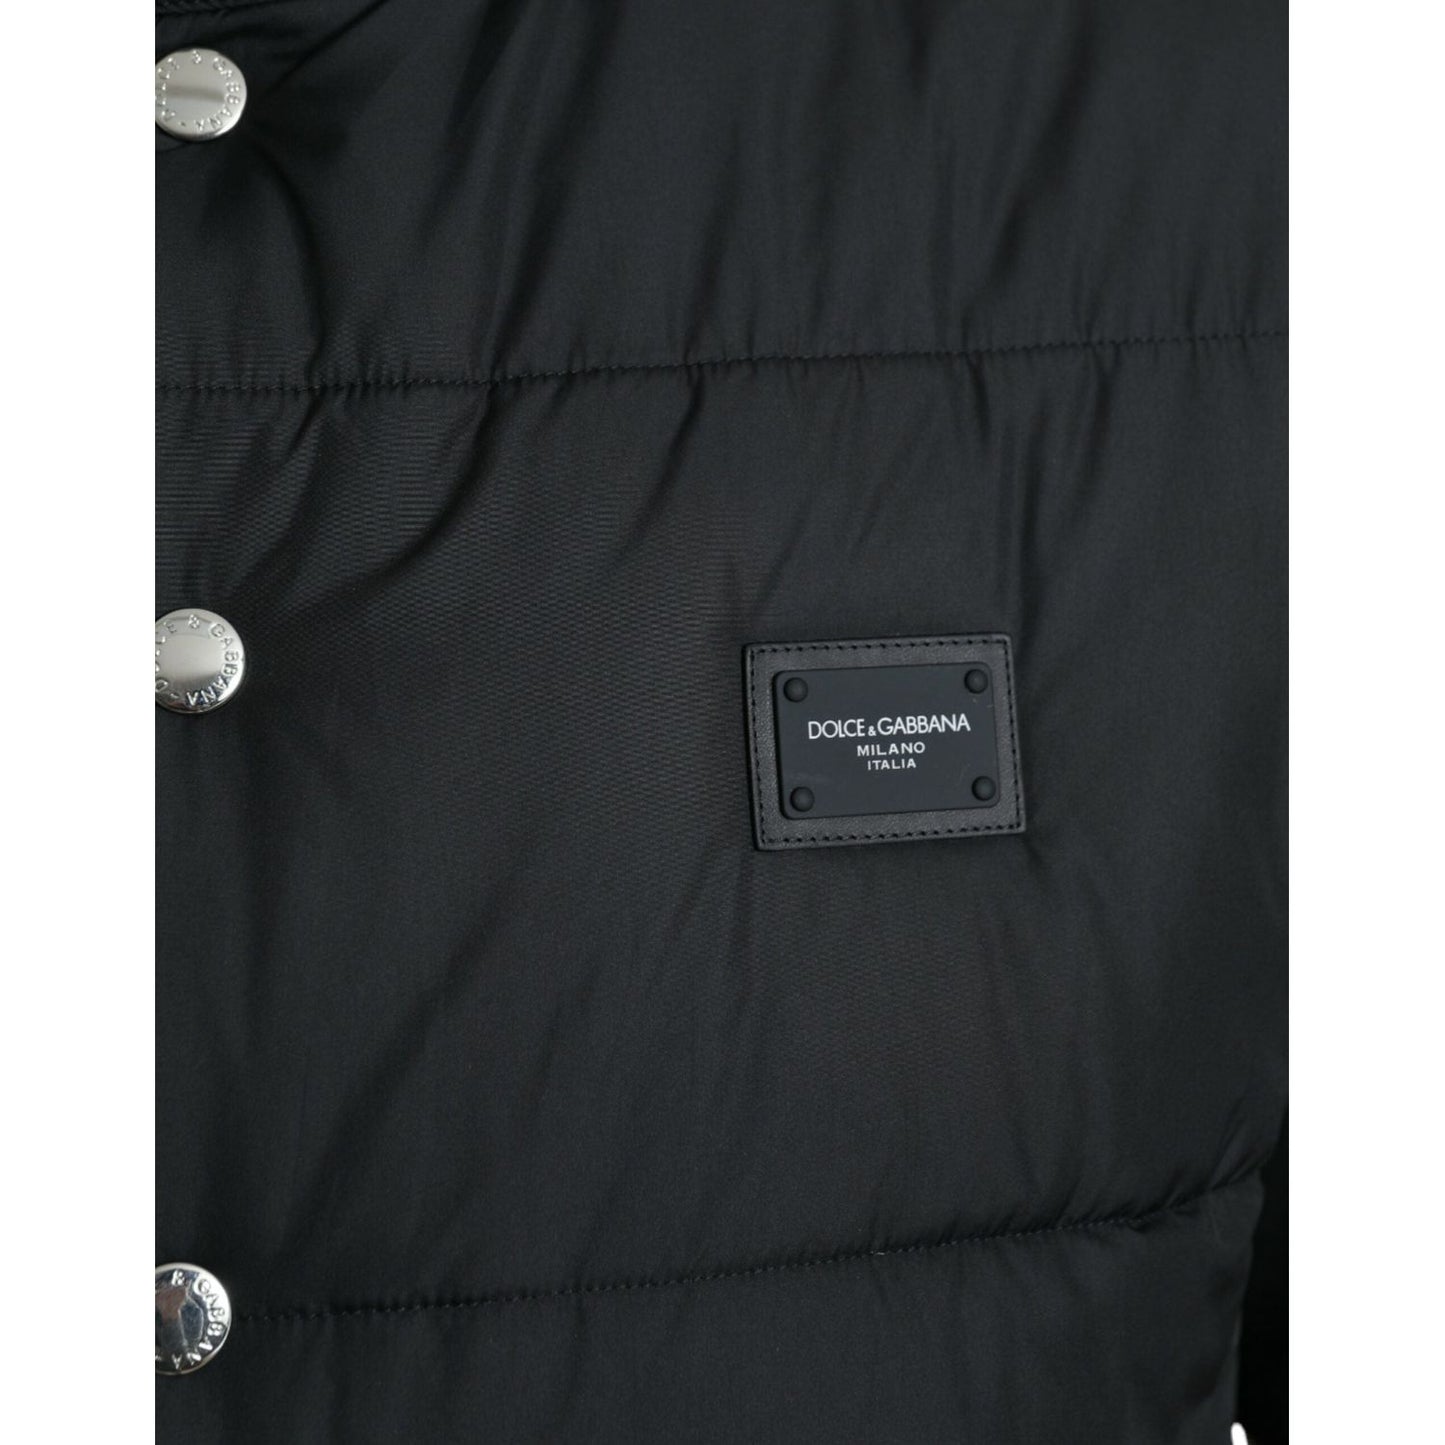 Dolce & Gabbana Sleek Black High-Neck Vest Jacket black-polyester-padded-vest-logo-jacket